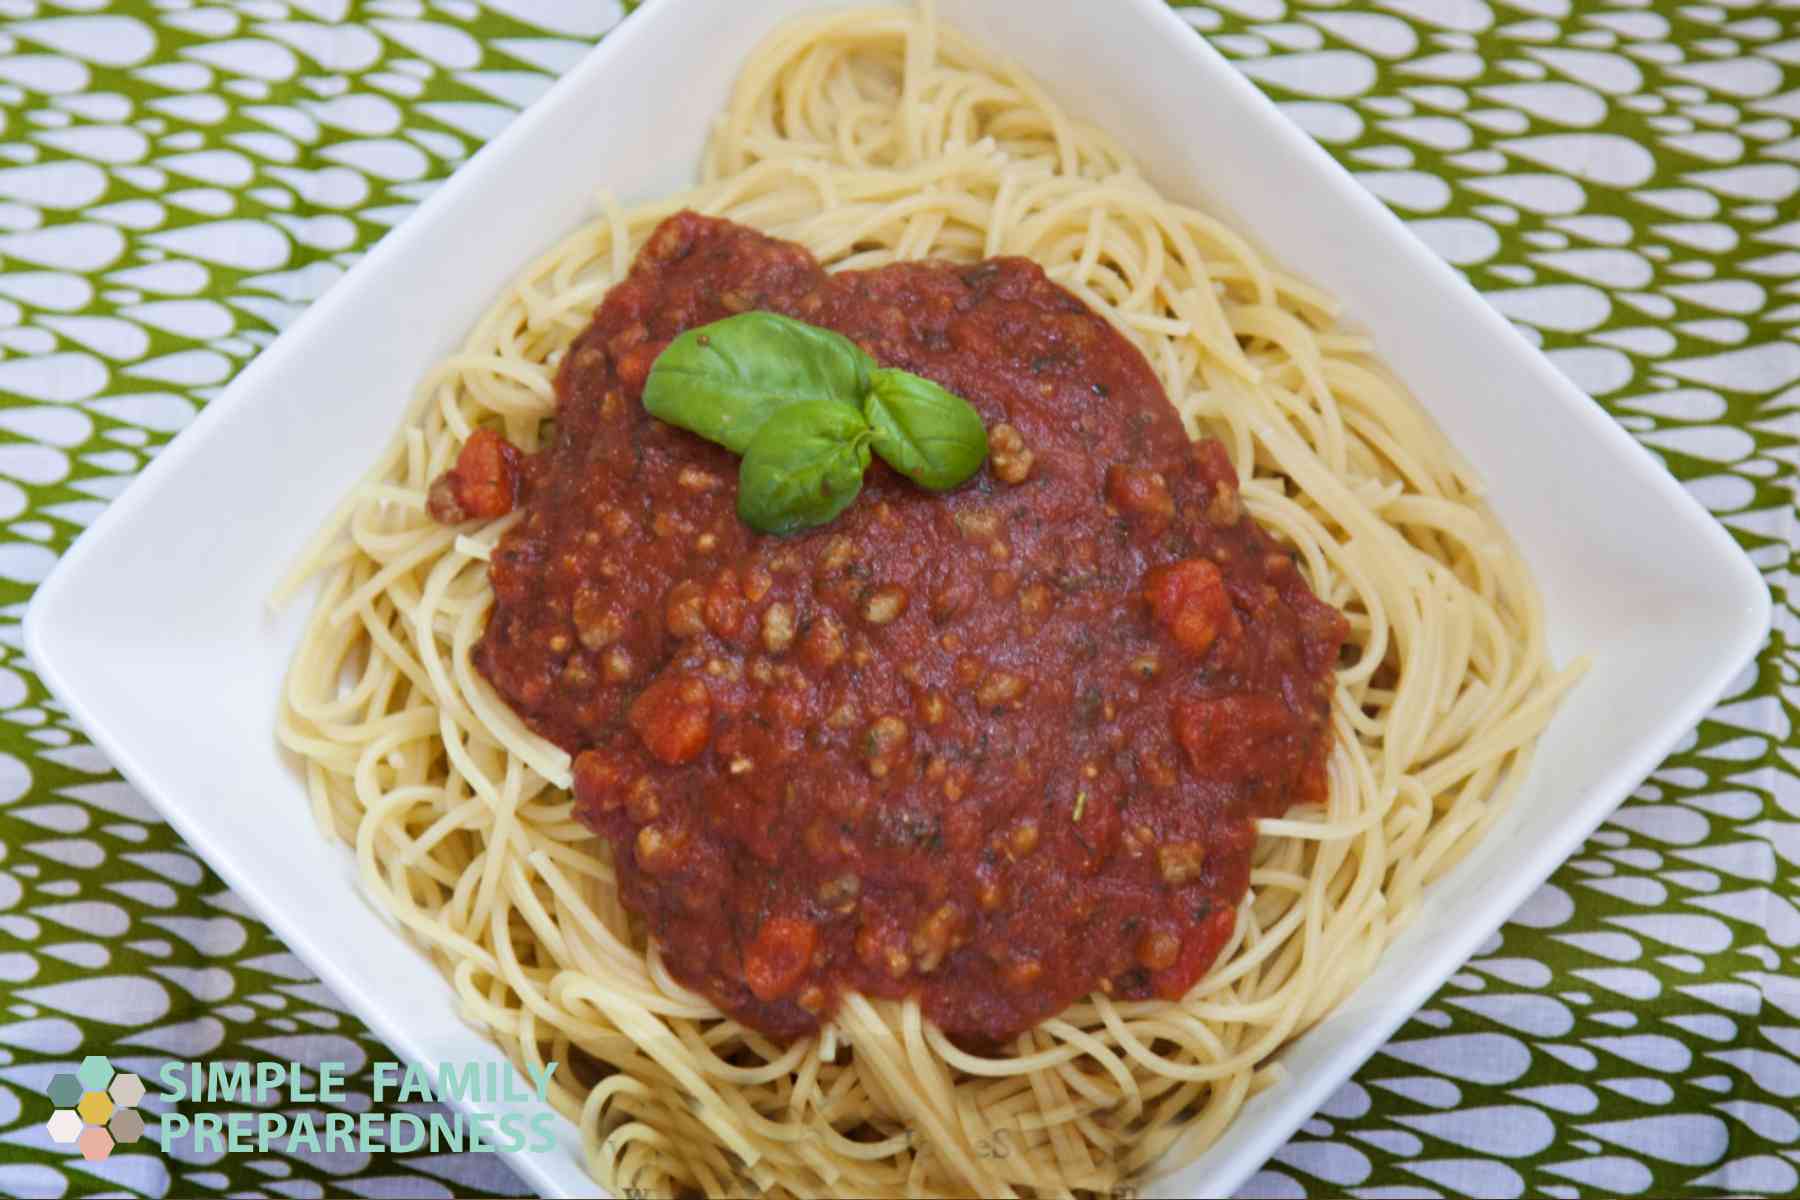 homemade powdered tomato sauce on spaghetti